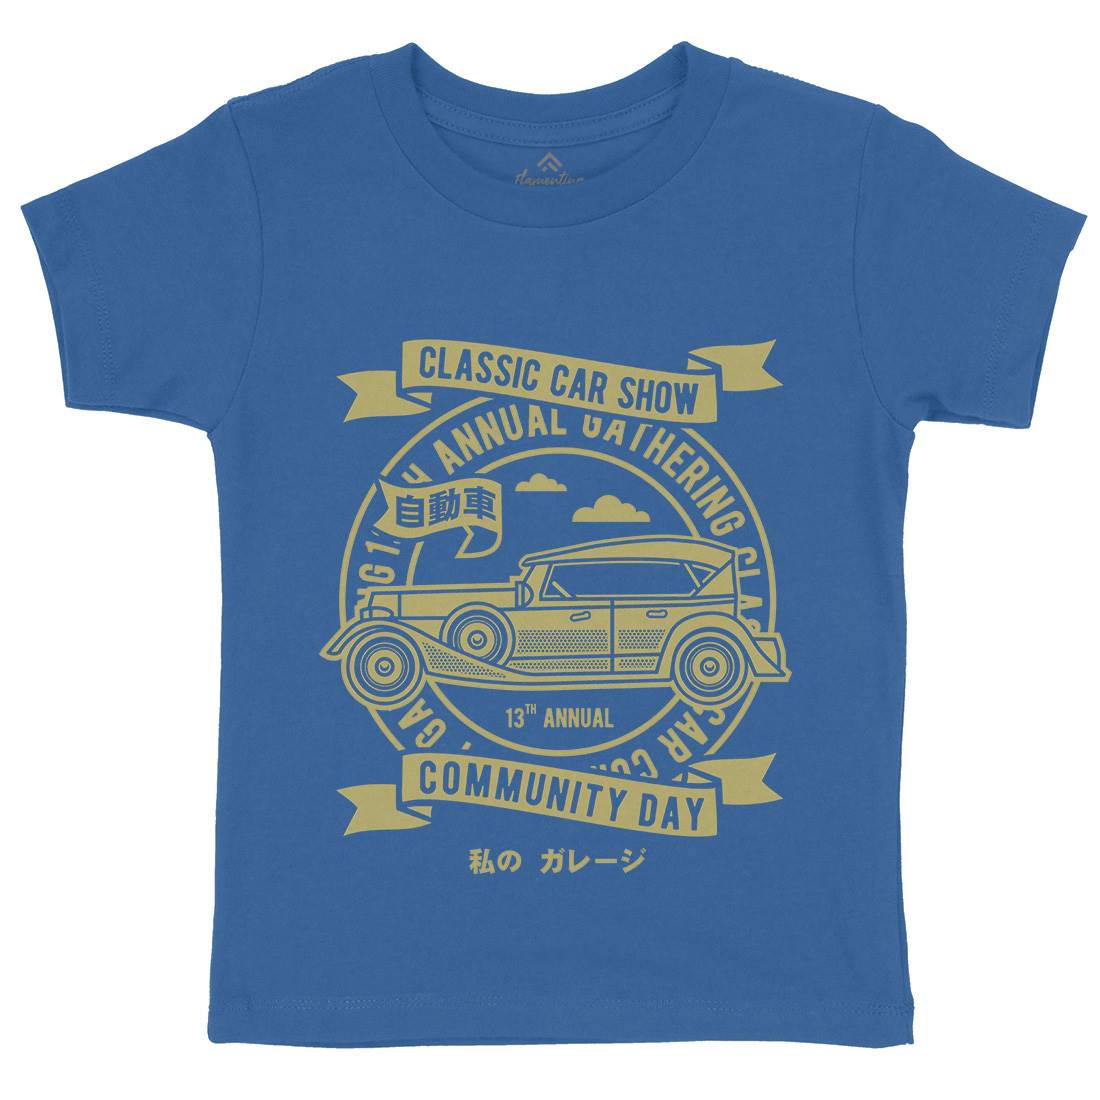 Classic Car Show Kids Crew Neck T-Shirt Cars A218